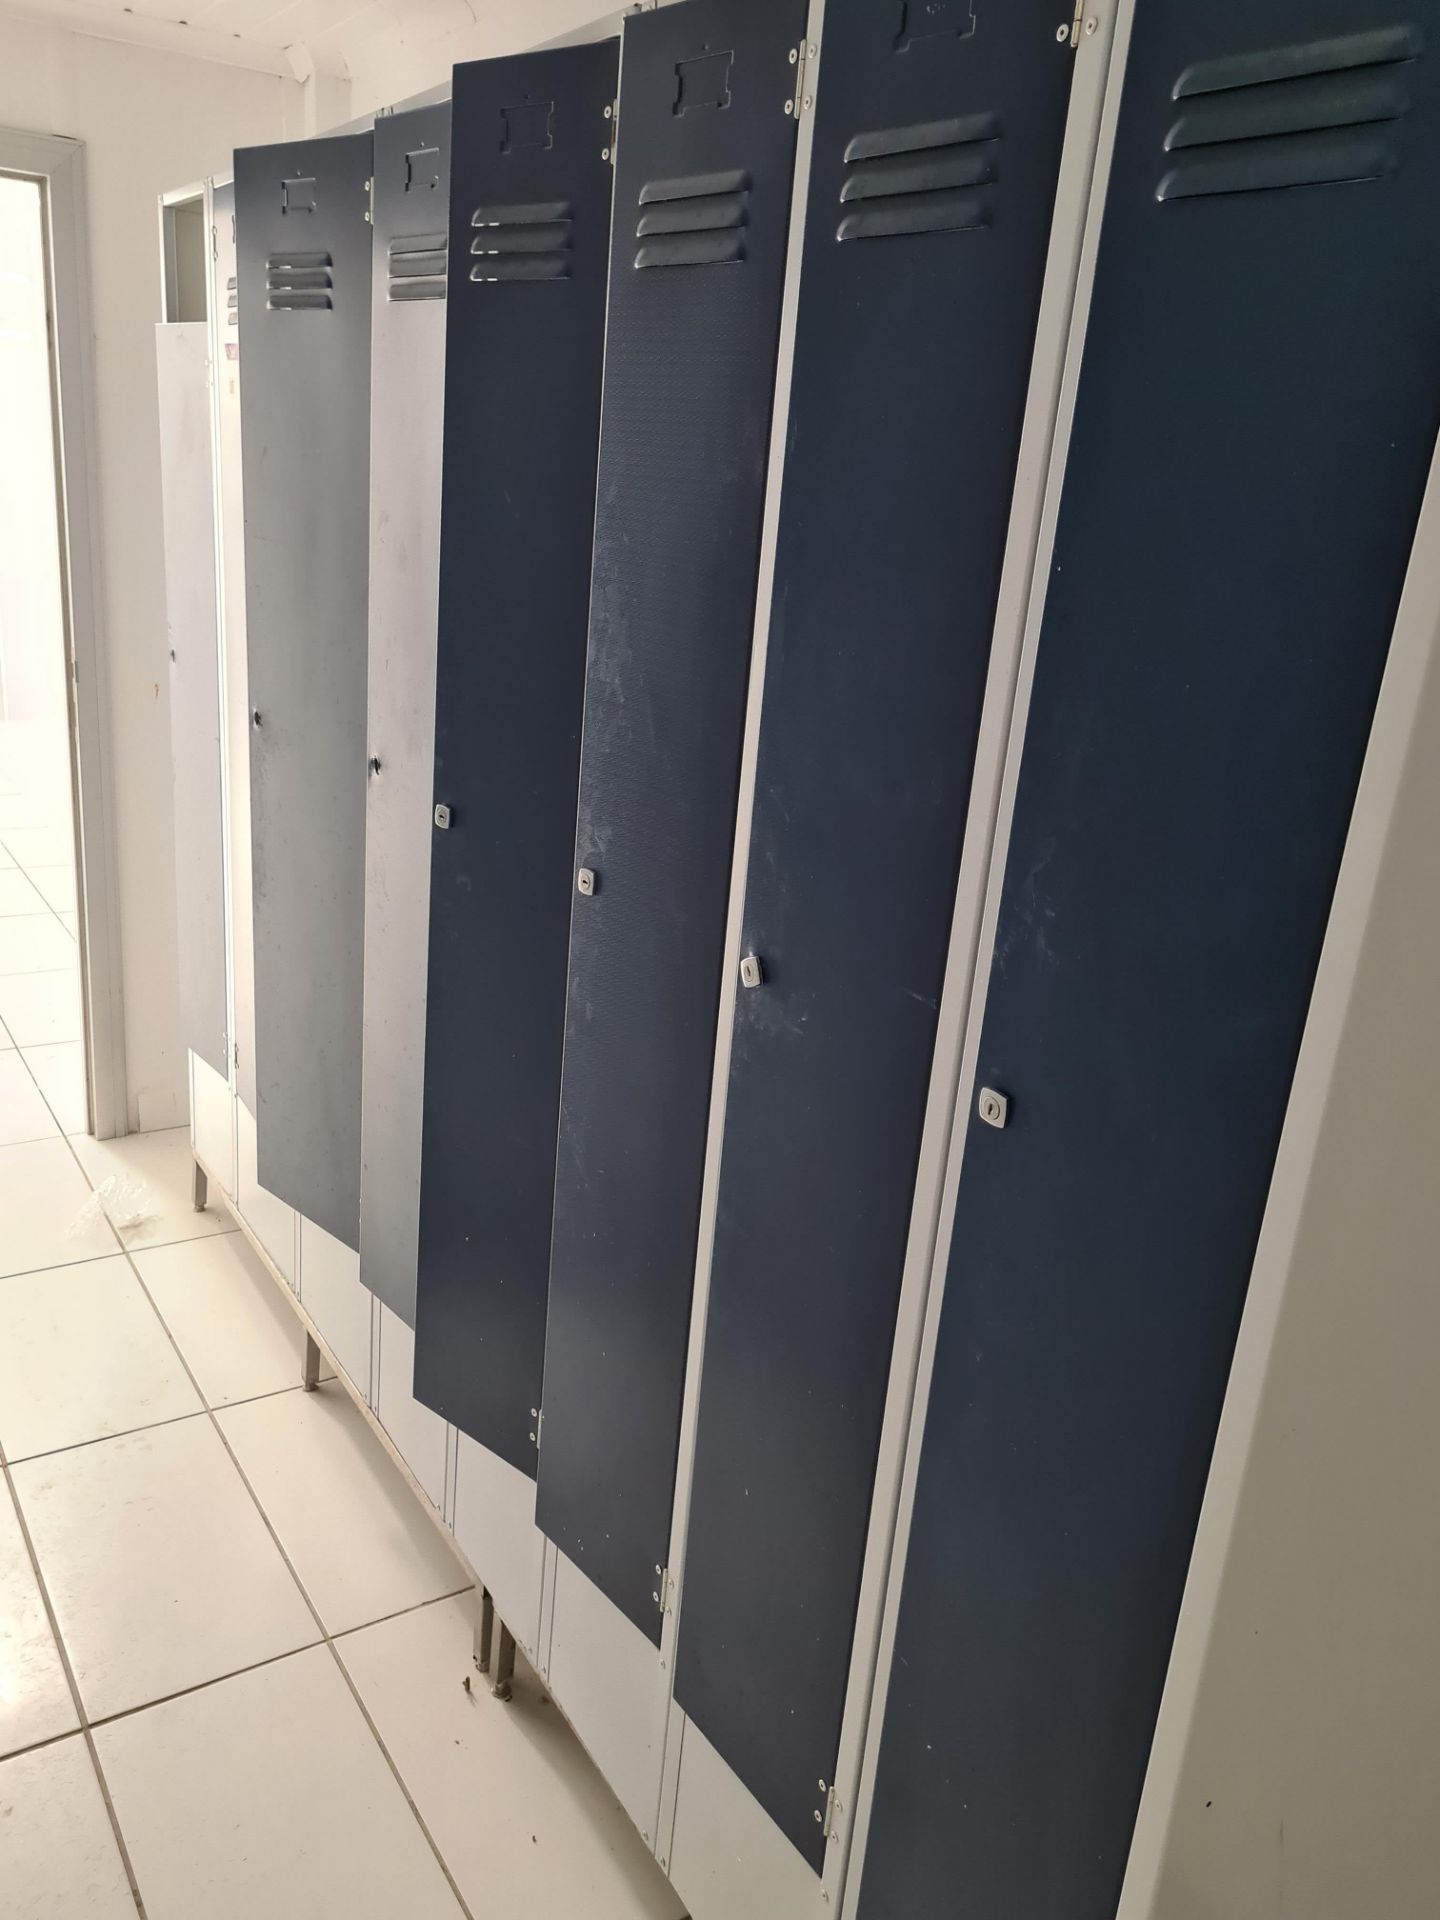 Ten Grey and Blue Metal Personal Lockers (No Keys) - Image 3 of 3